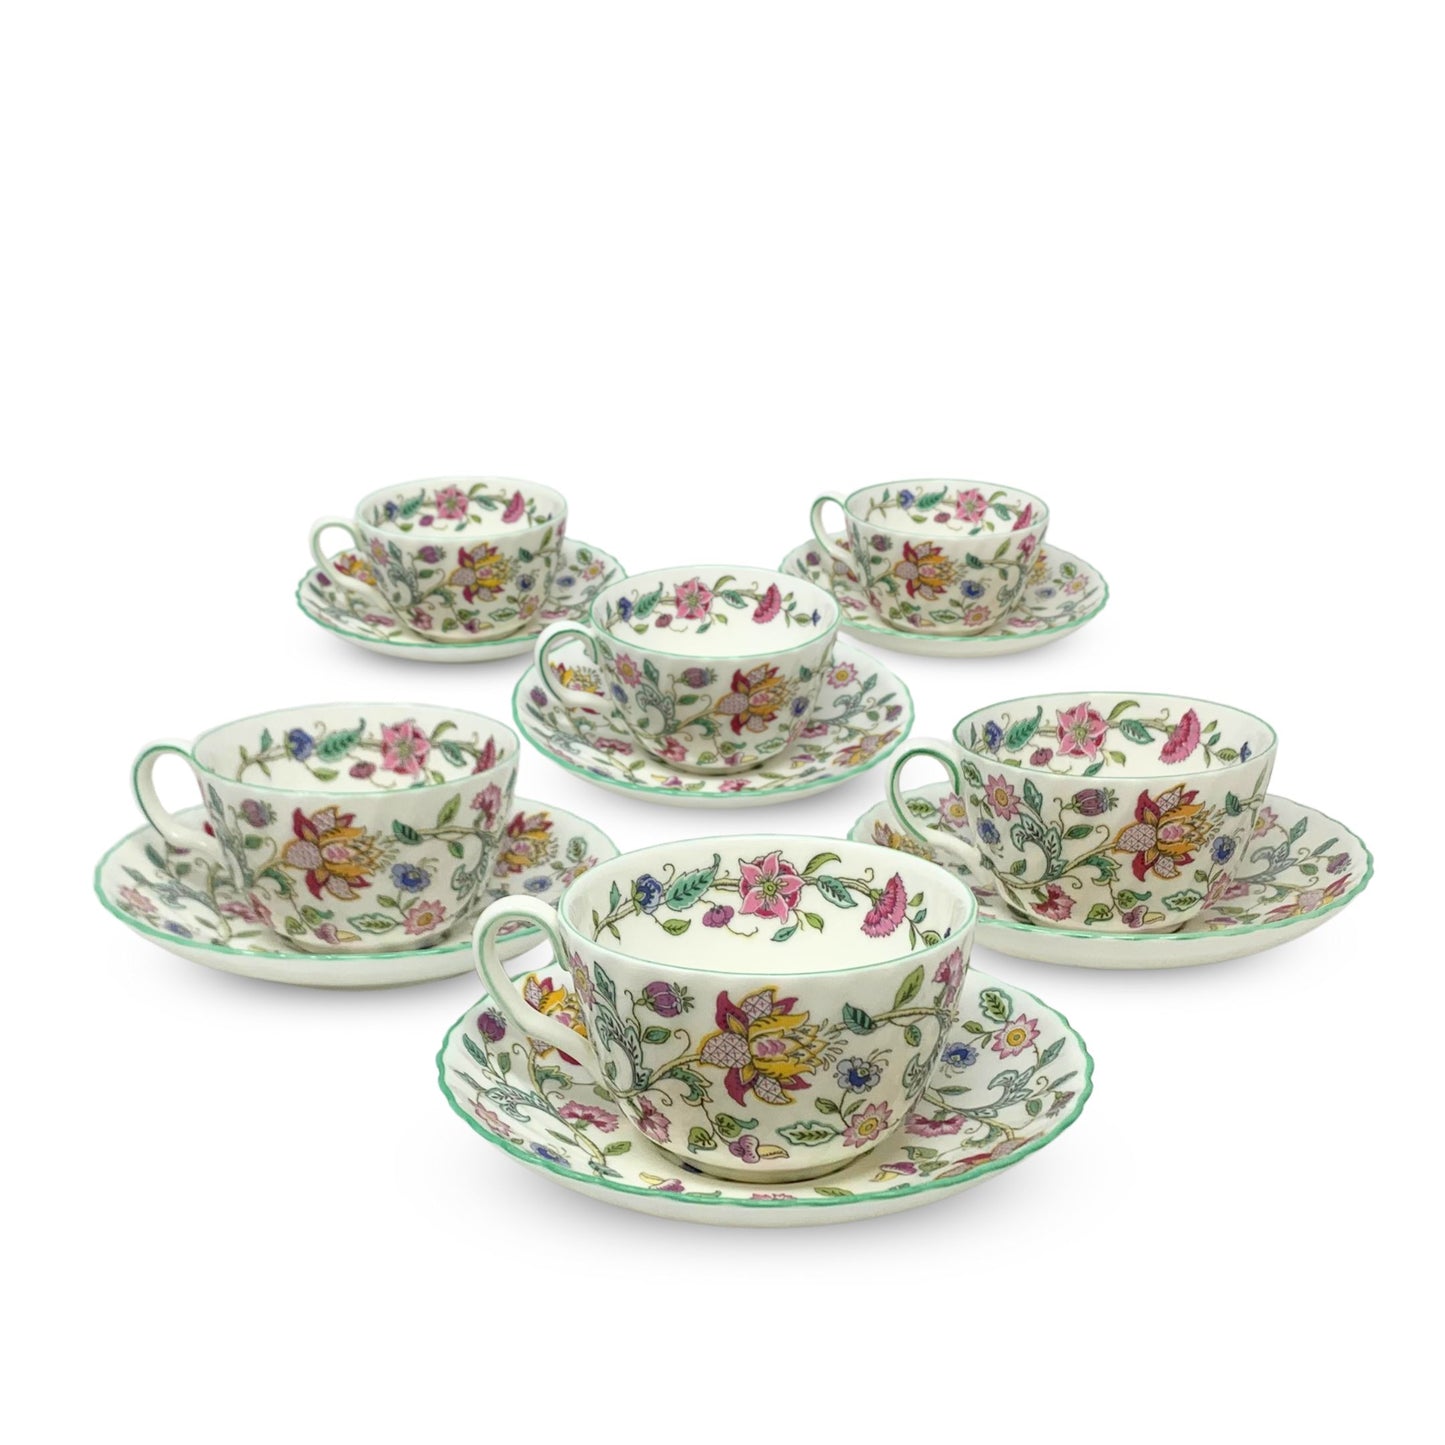 Minton "Haddon Hall" Set of 6 Teacups & Saucers (12pcs)